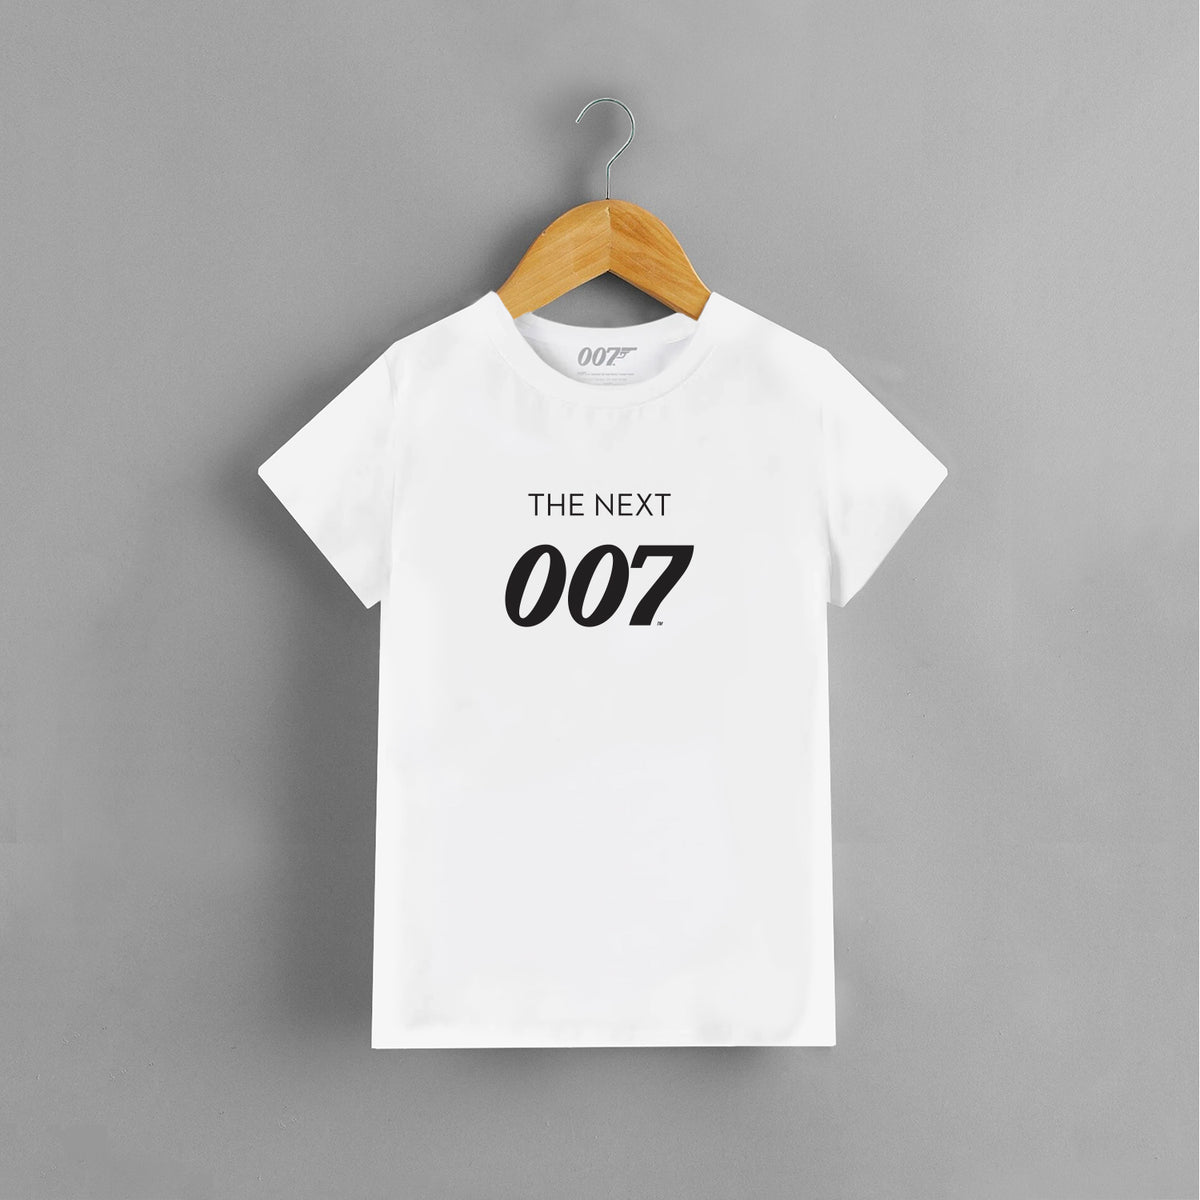 James Bond Kid/Teen The Next 007 T-Shirt (7 Colours)